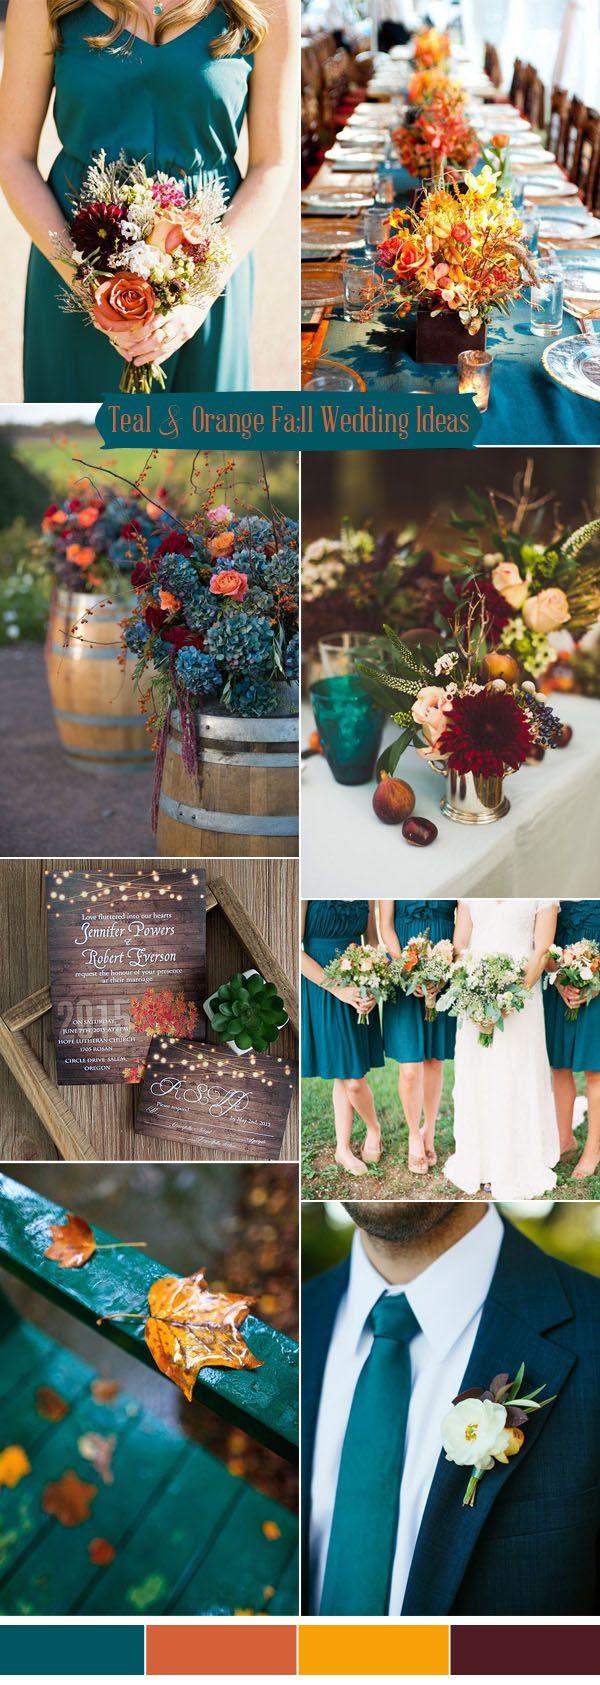 Wedding - Ten Prettiest Shades Of Blue For 2017 Wedding Color Ideas